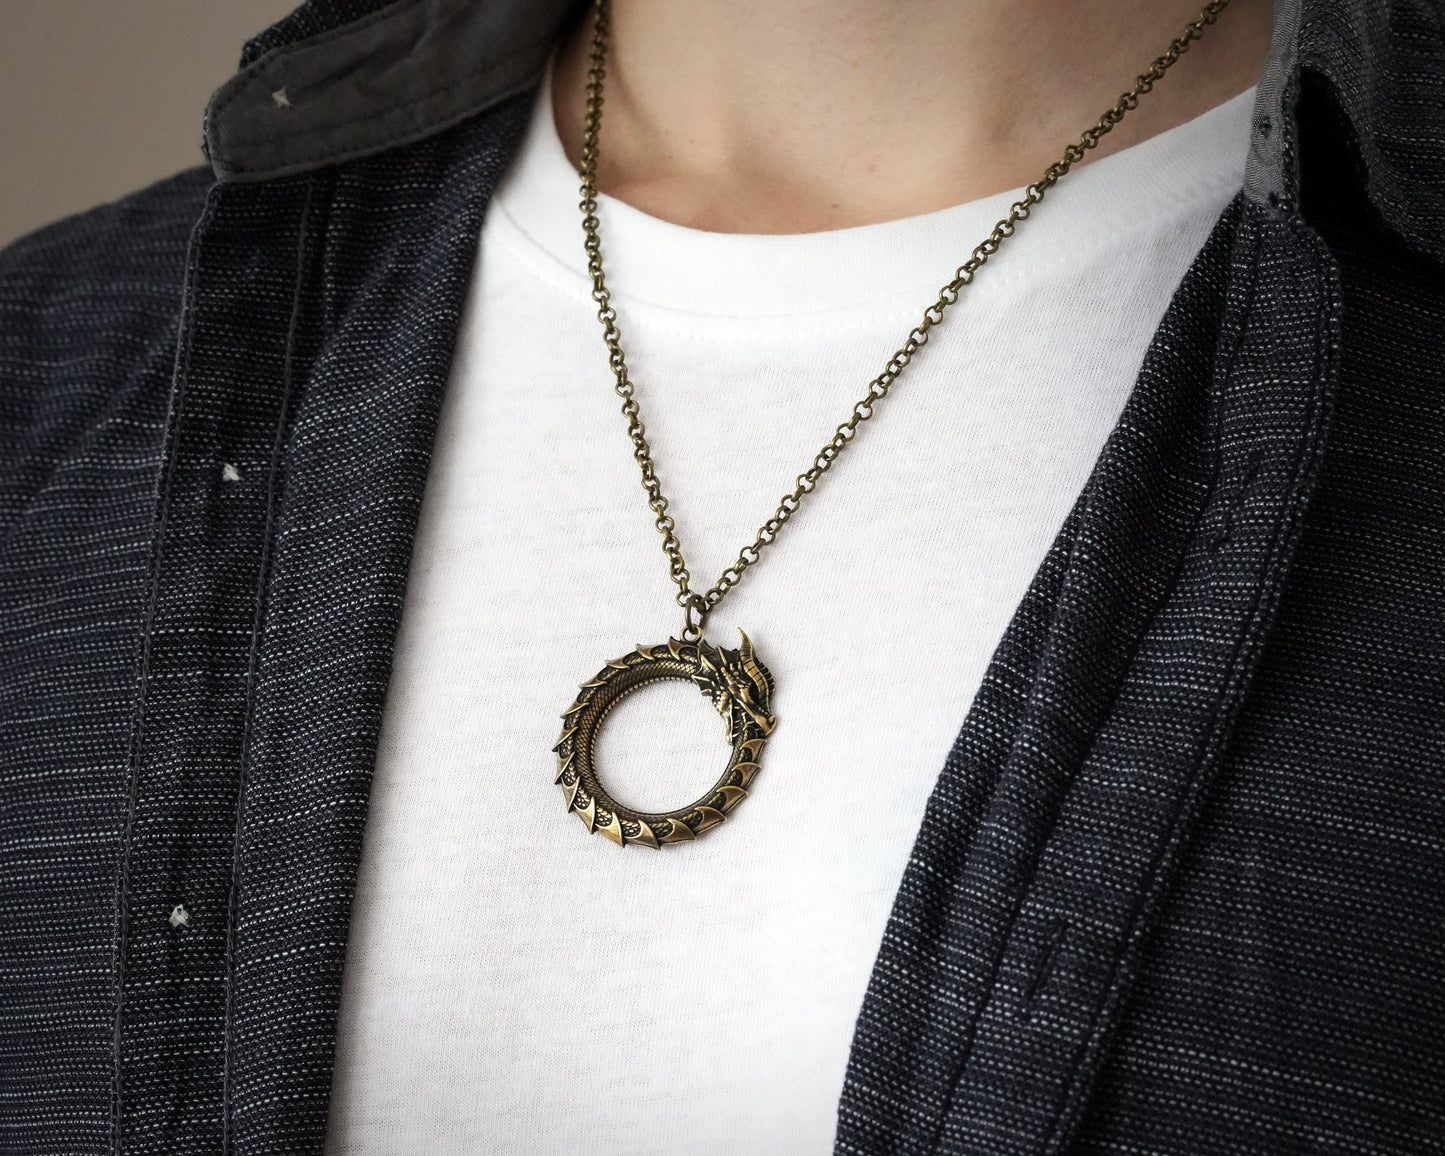 Ouroboros Dragon Snake Viking Pendant Necklace Amulet Charm With Chain - Baldur Jewelry